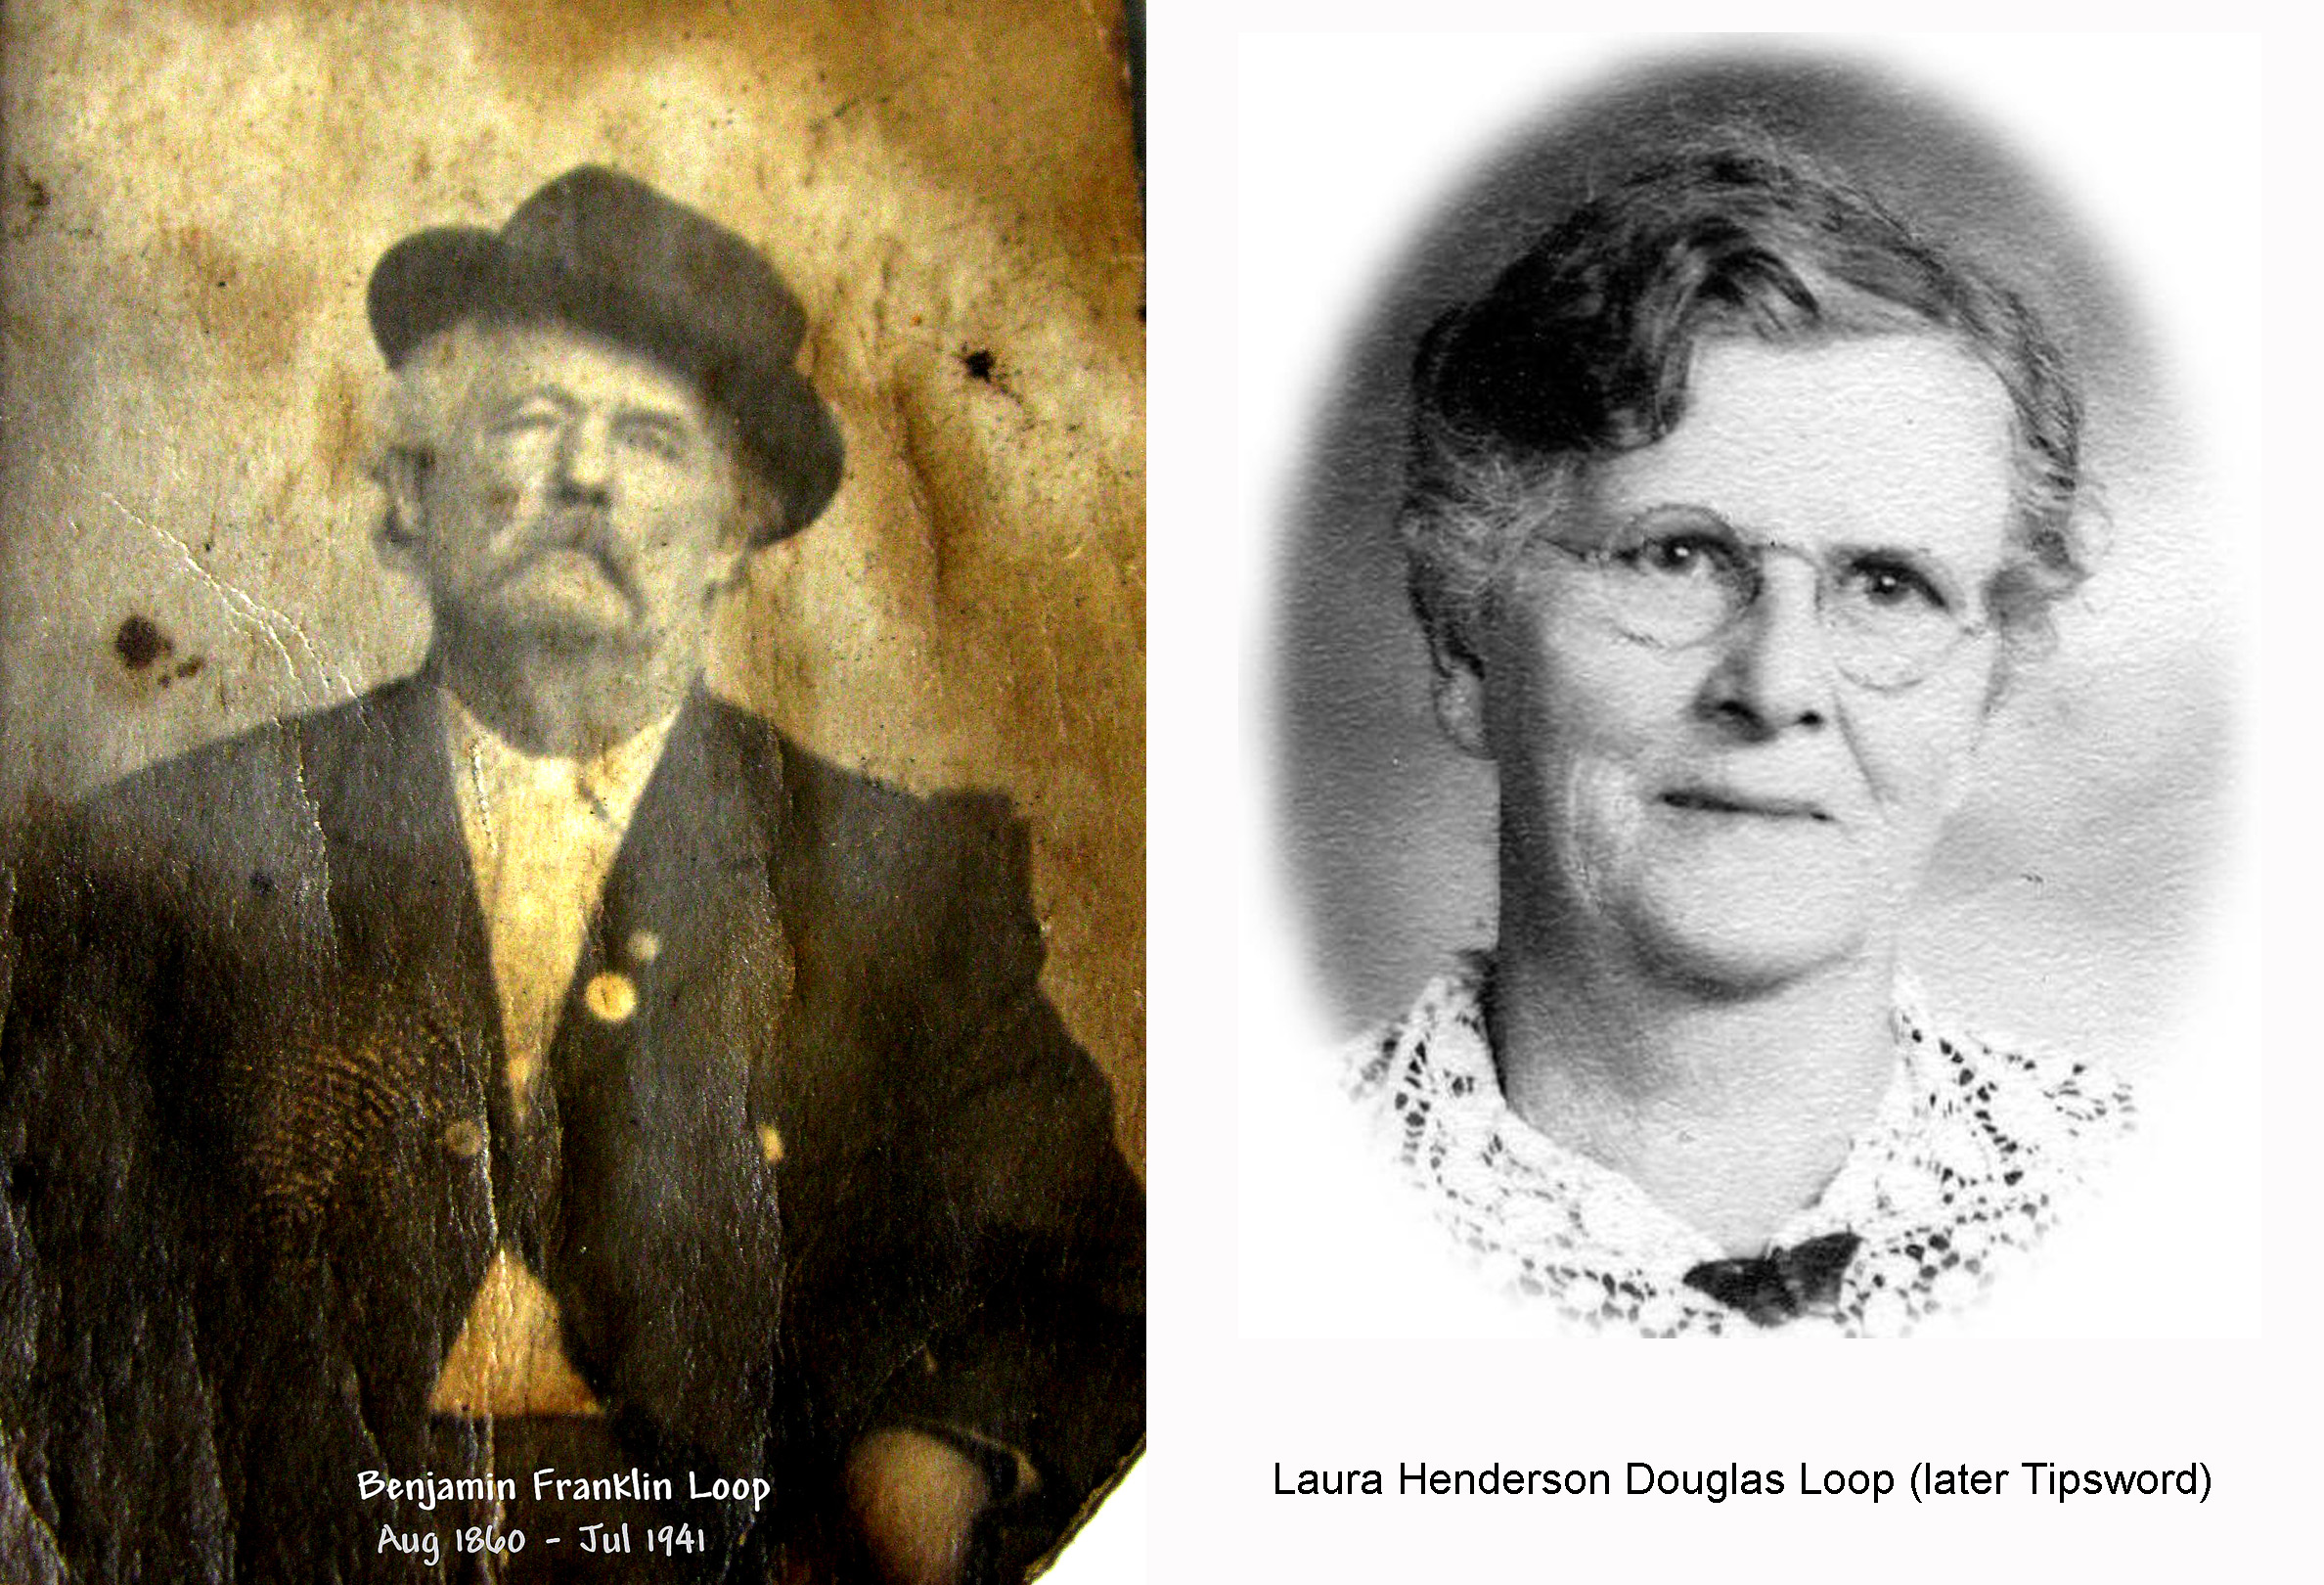 Benjamin Franklin Loop and Laura Henderson Douglas